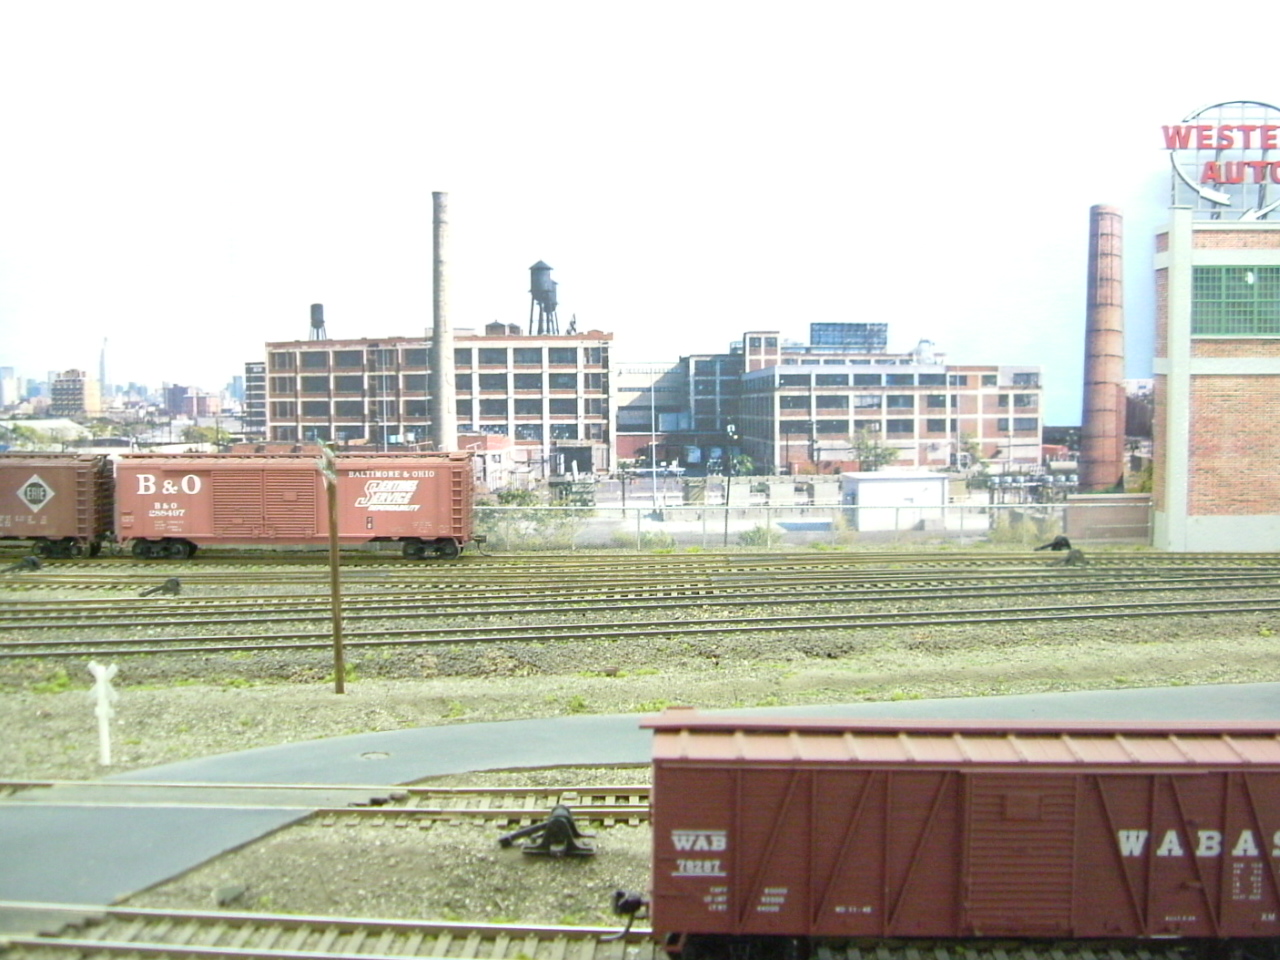 Bill Nesbitt's PRR W. Newark branch yard view